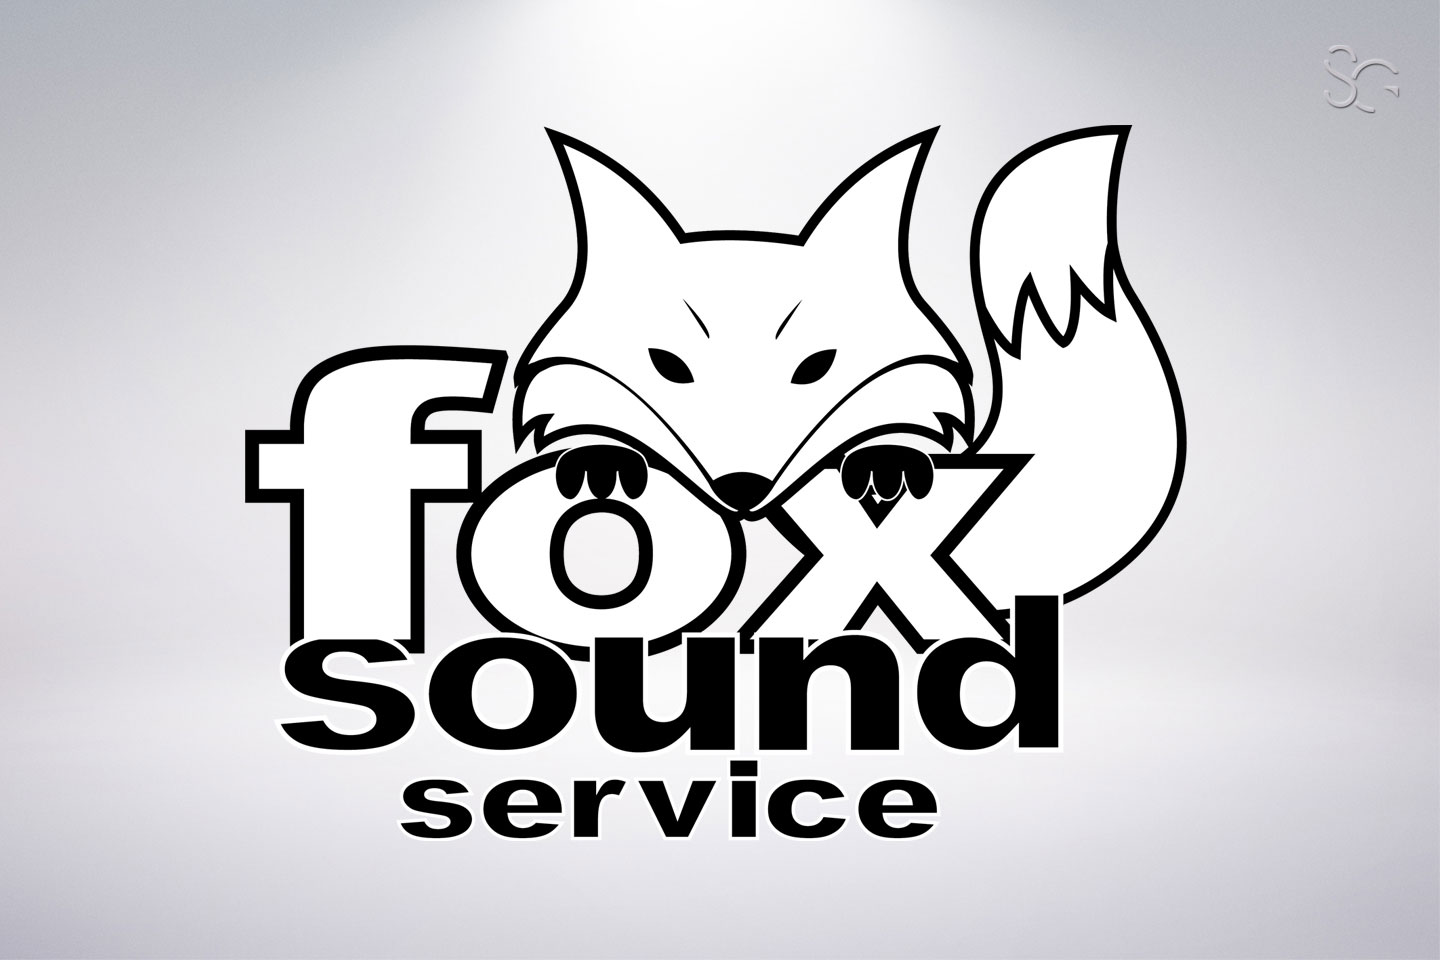 LOGO FOXSOUND SERVICE